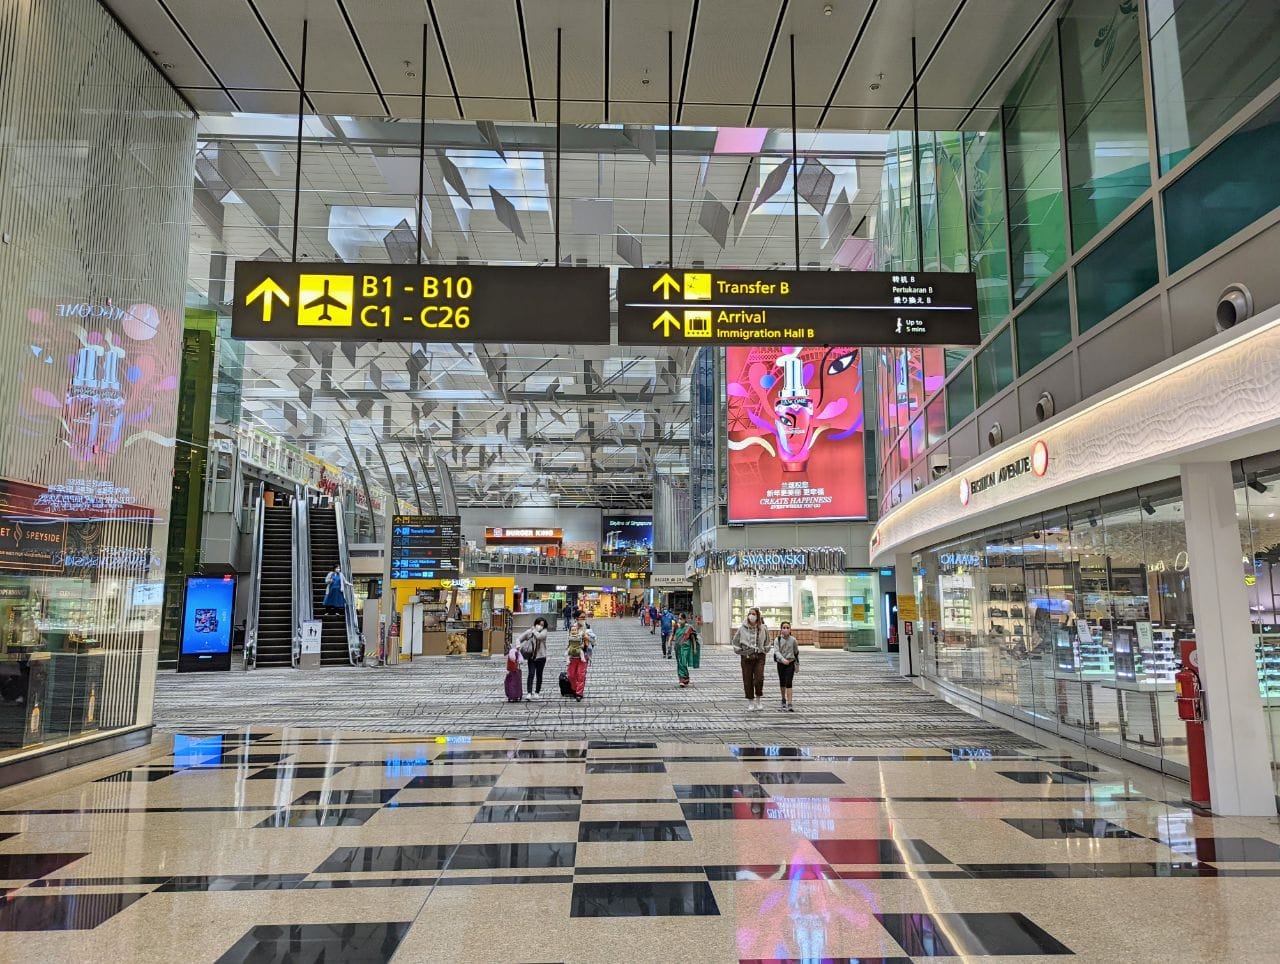 Singapore Changi Airport, Terminal 3